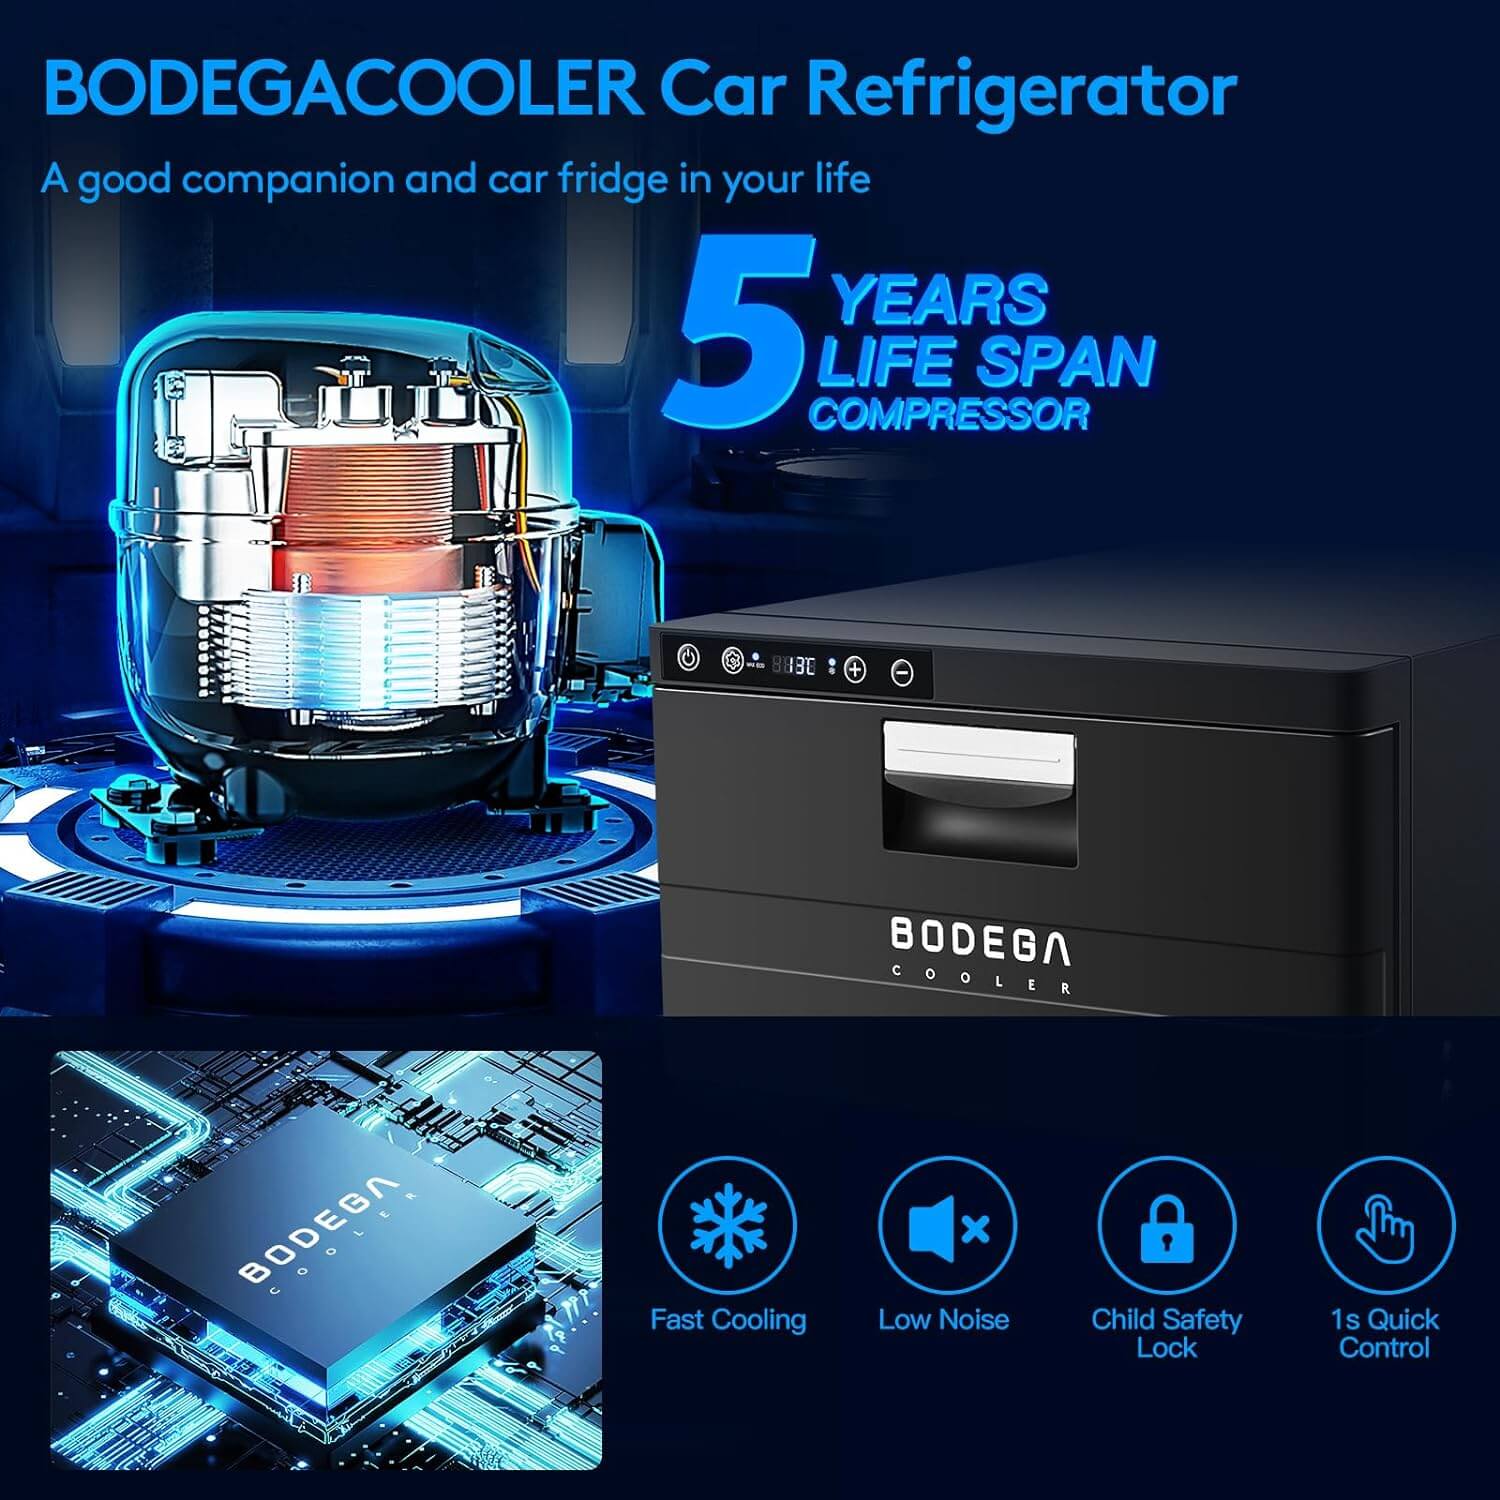 Bodegacooler Car Drawer Refrigerator 32.8QT